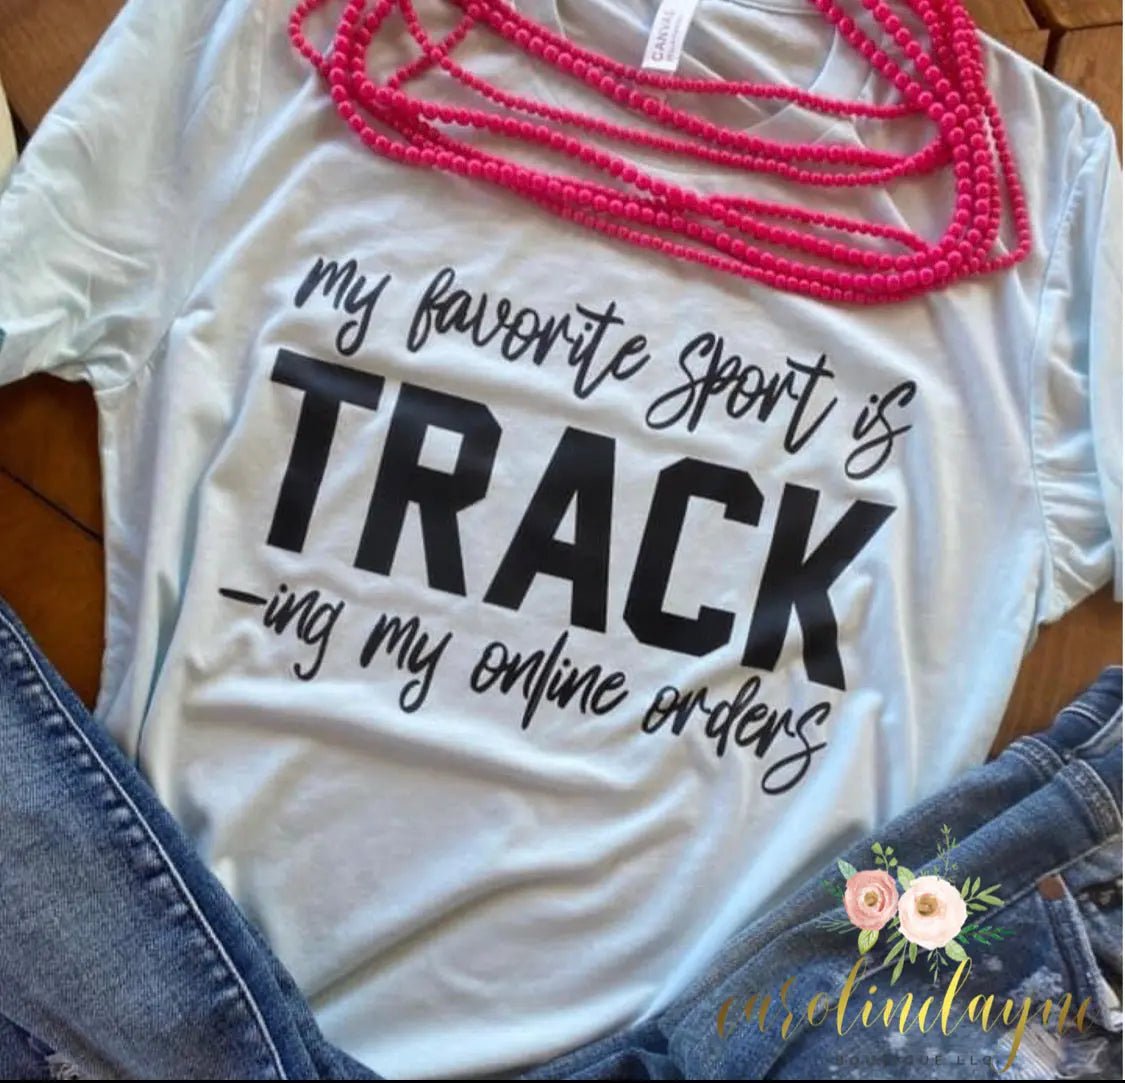 My favorite sport is track-ing my online order - Caroline Layne Boutique LLC